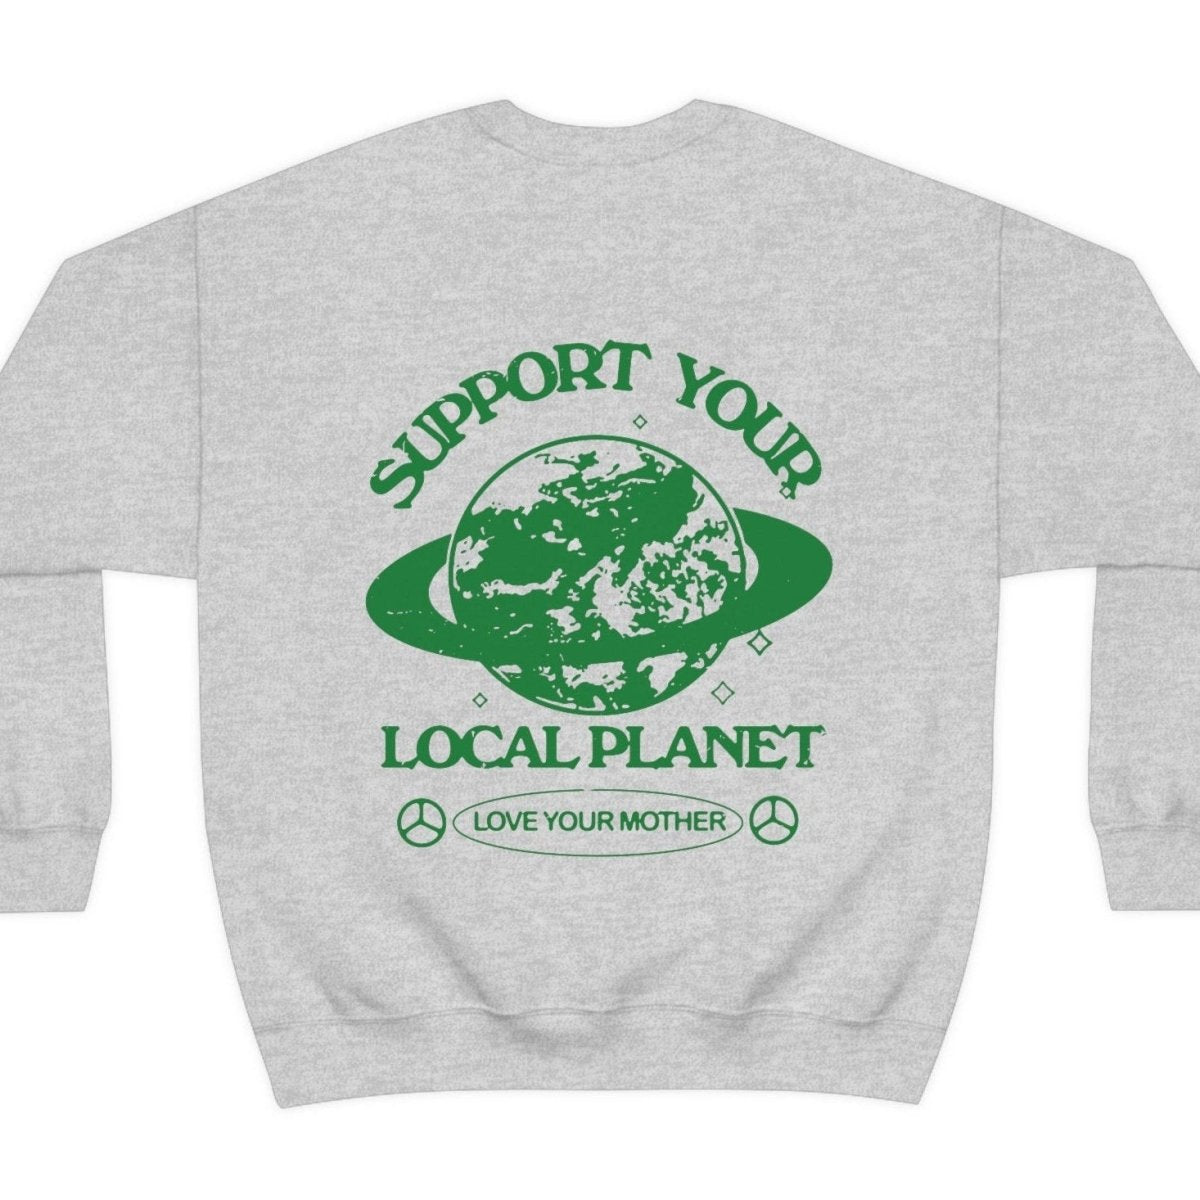 'Support Your Local Planet' Sweatshirt - Sweatshirts & Hoodies - Kinder Planet Company